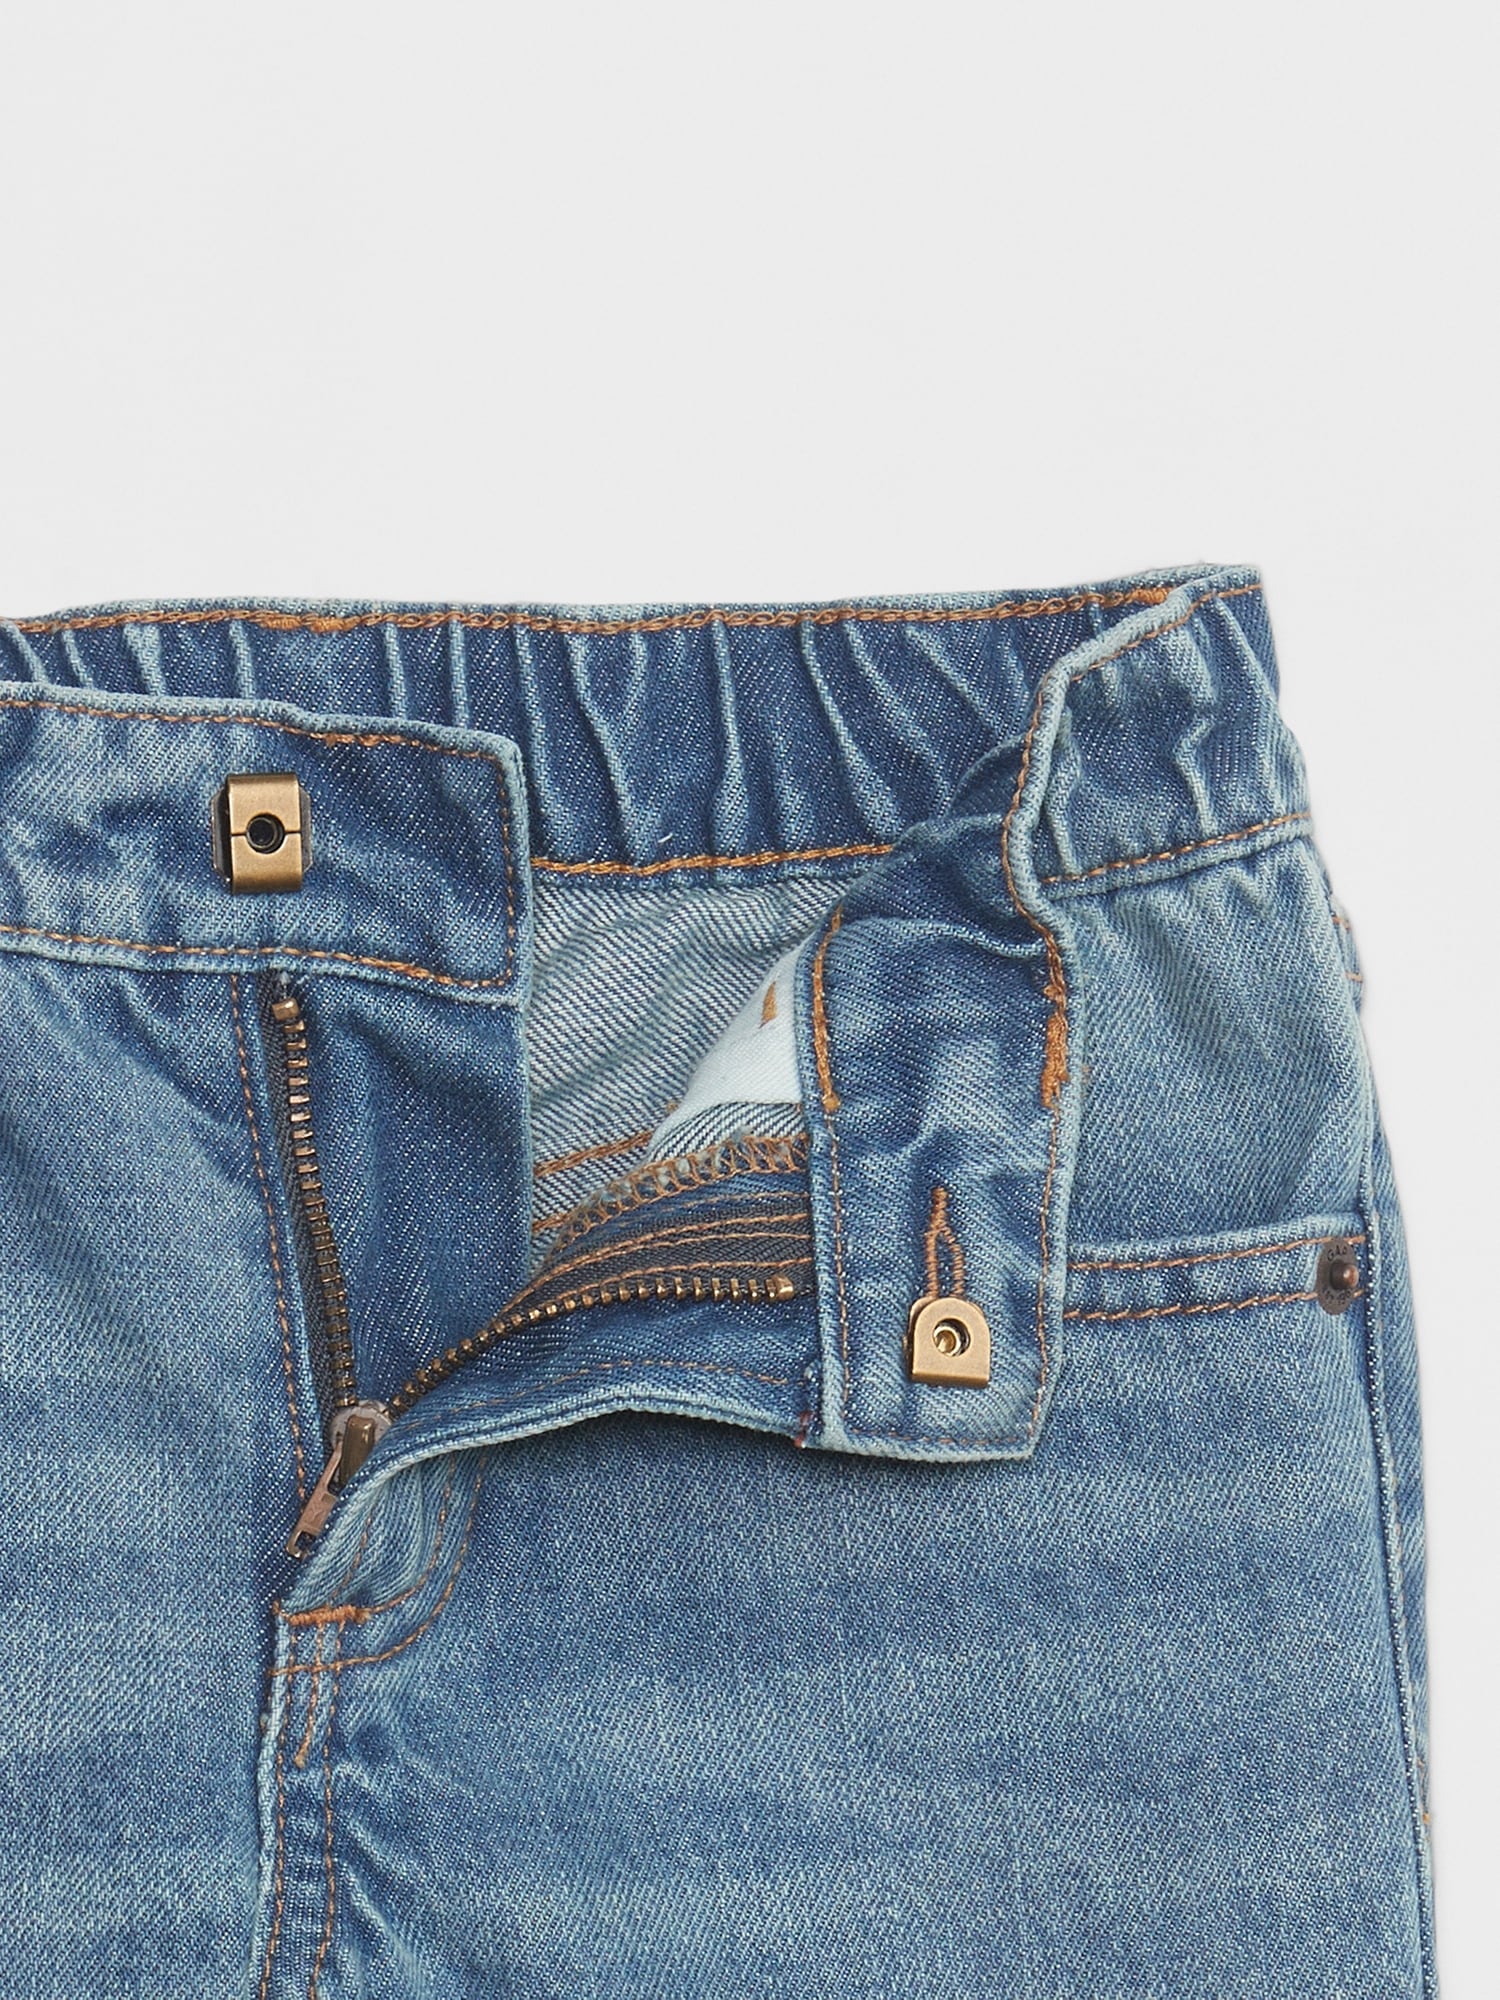 babyGap '90s Original Straight Jeans | Gap Factory